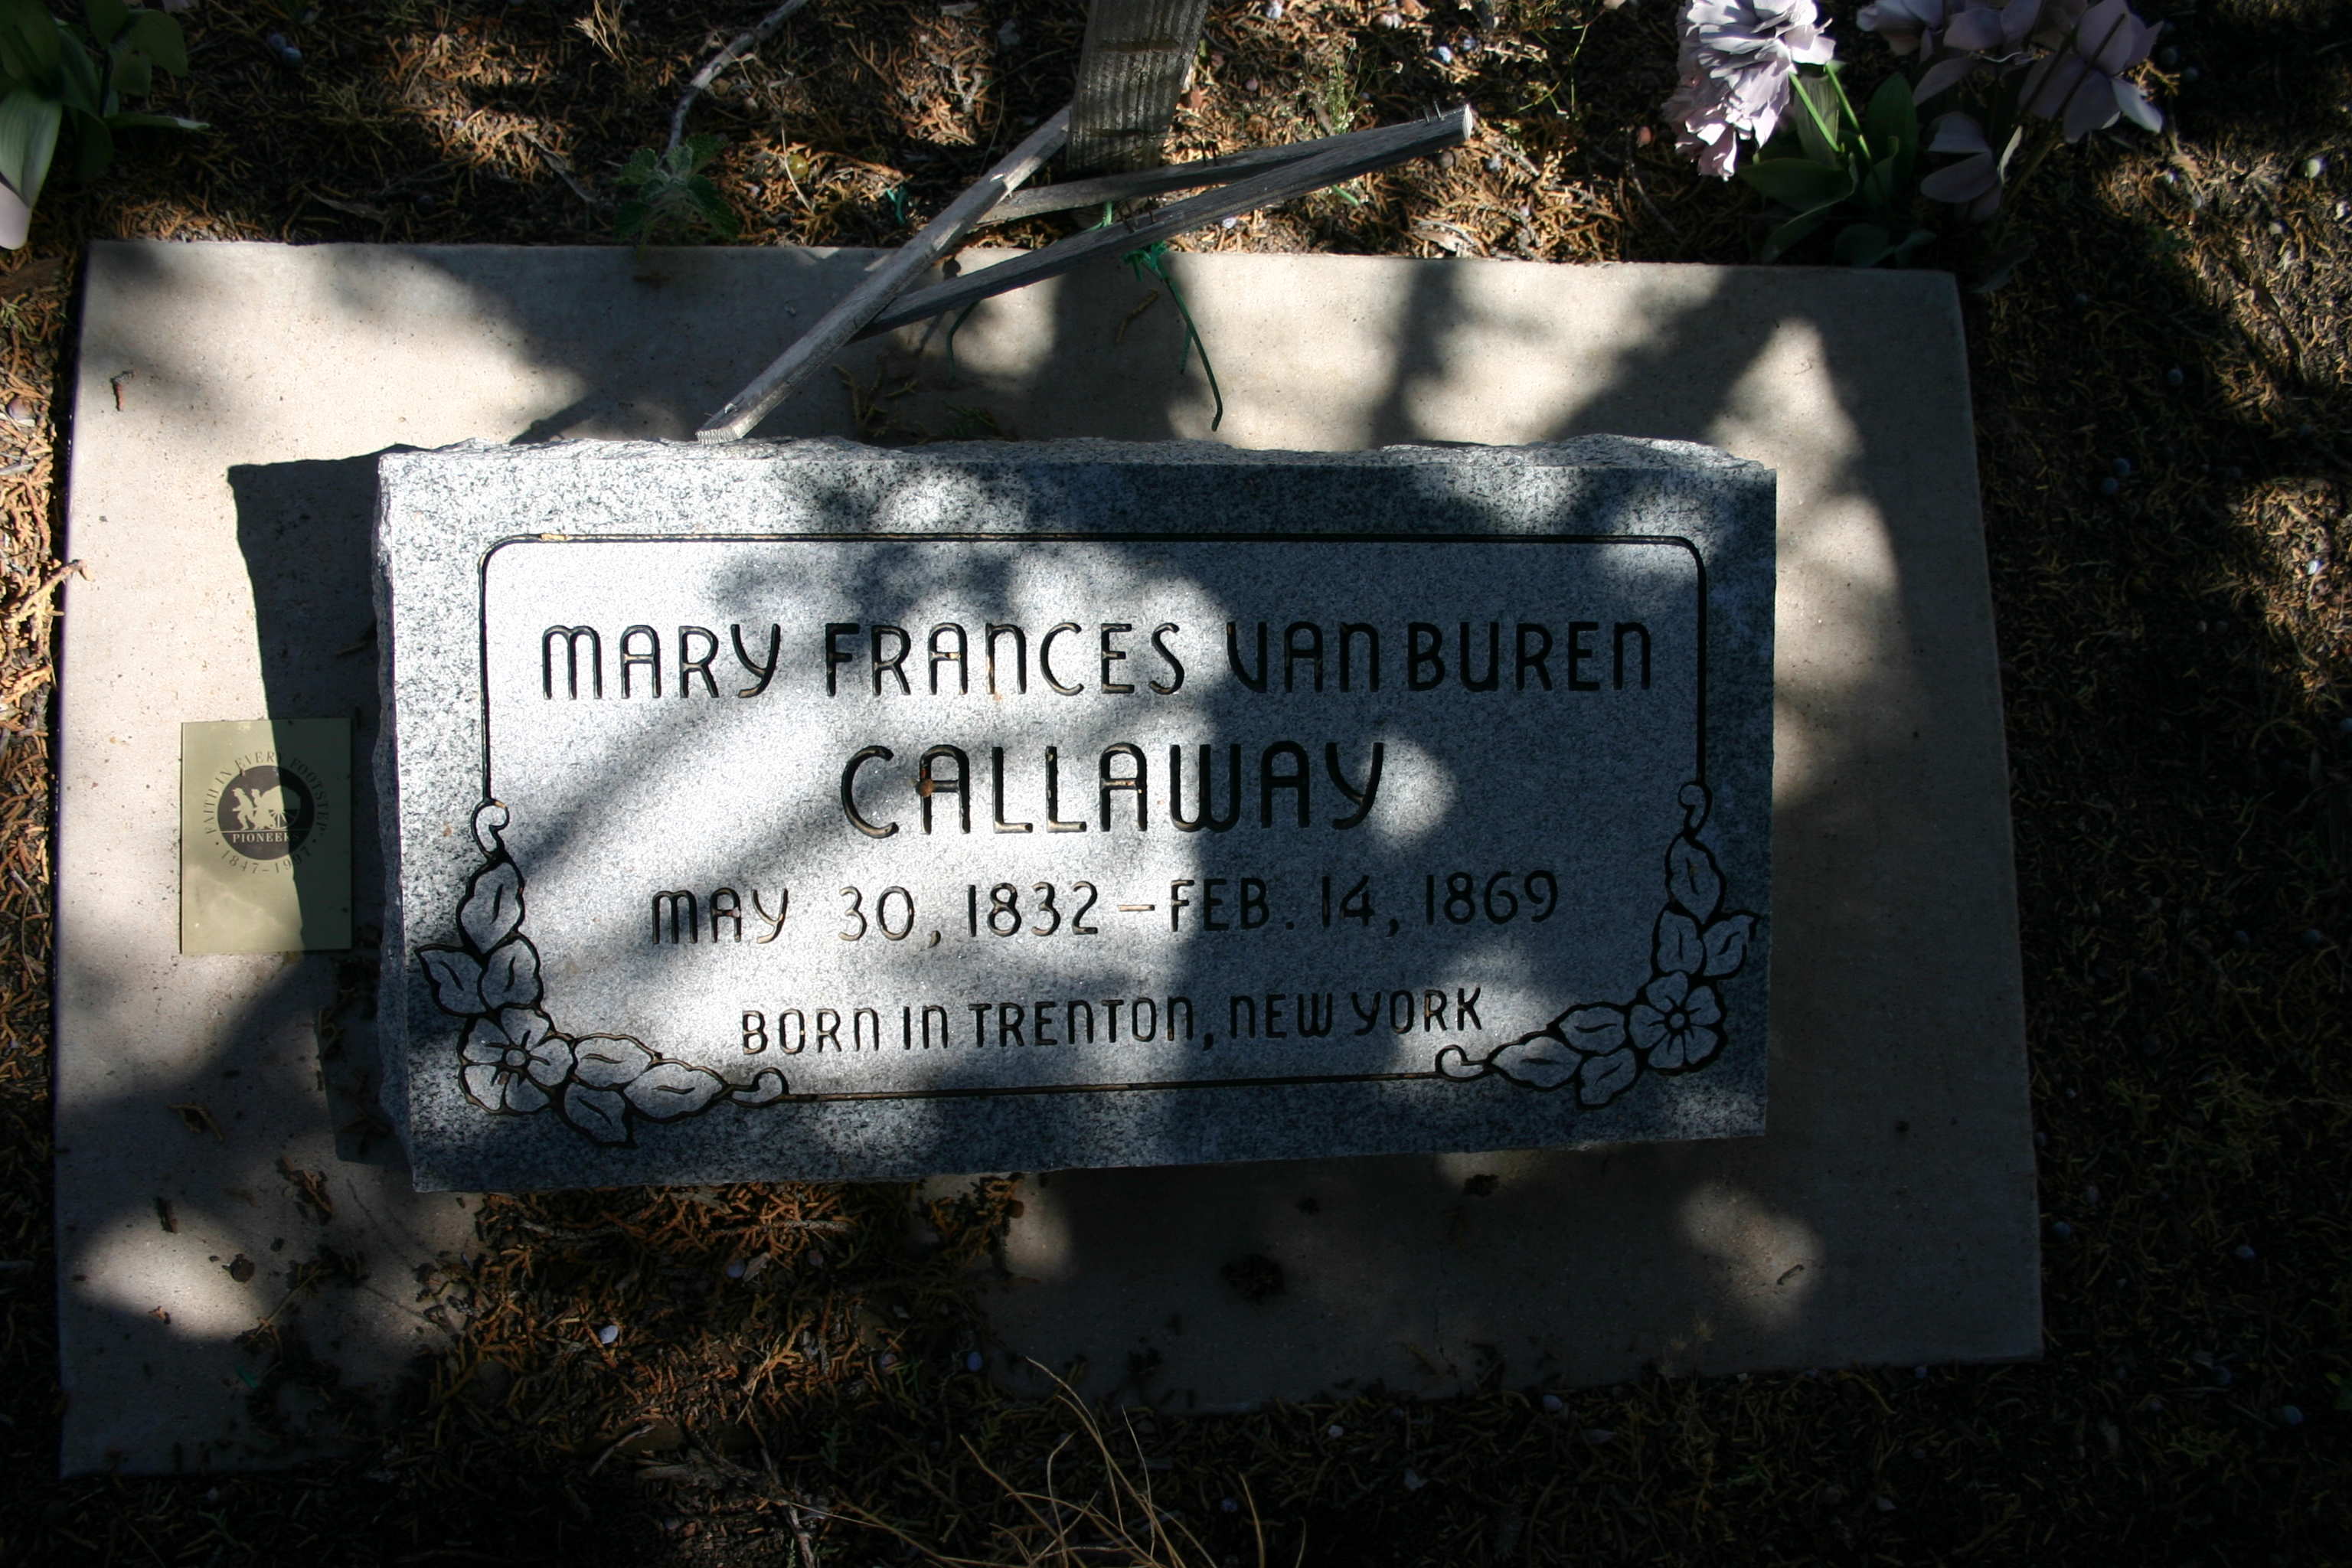 Mary Frances VanBuren Callaway gravestone at the Hebron Cemetery